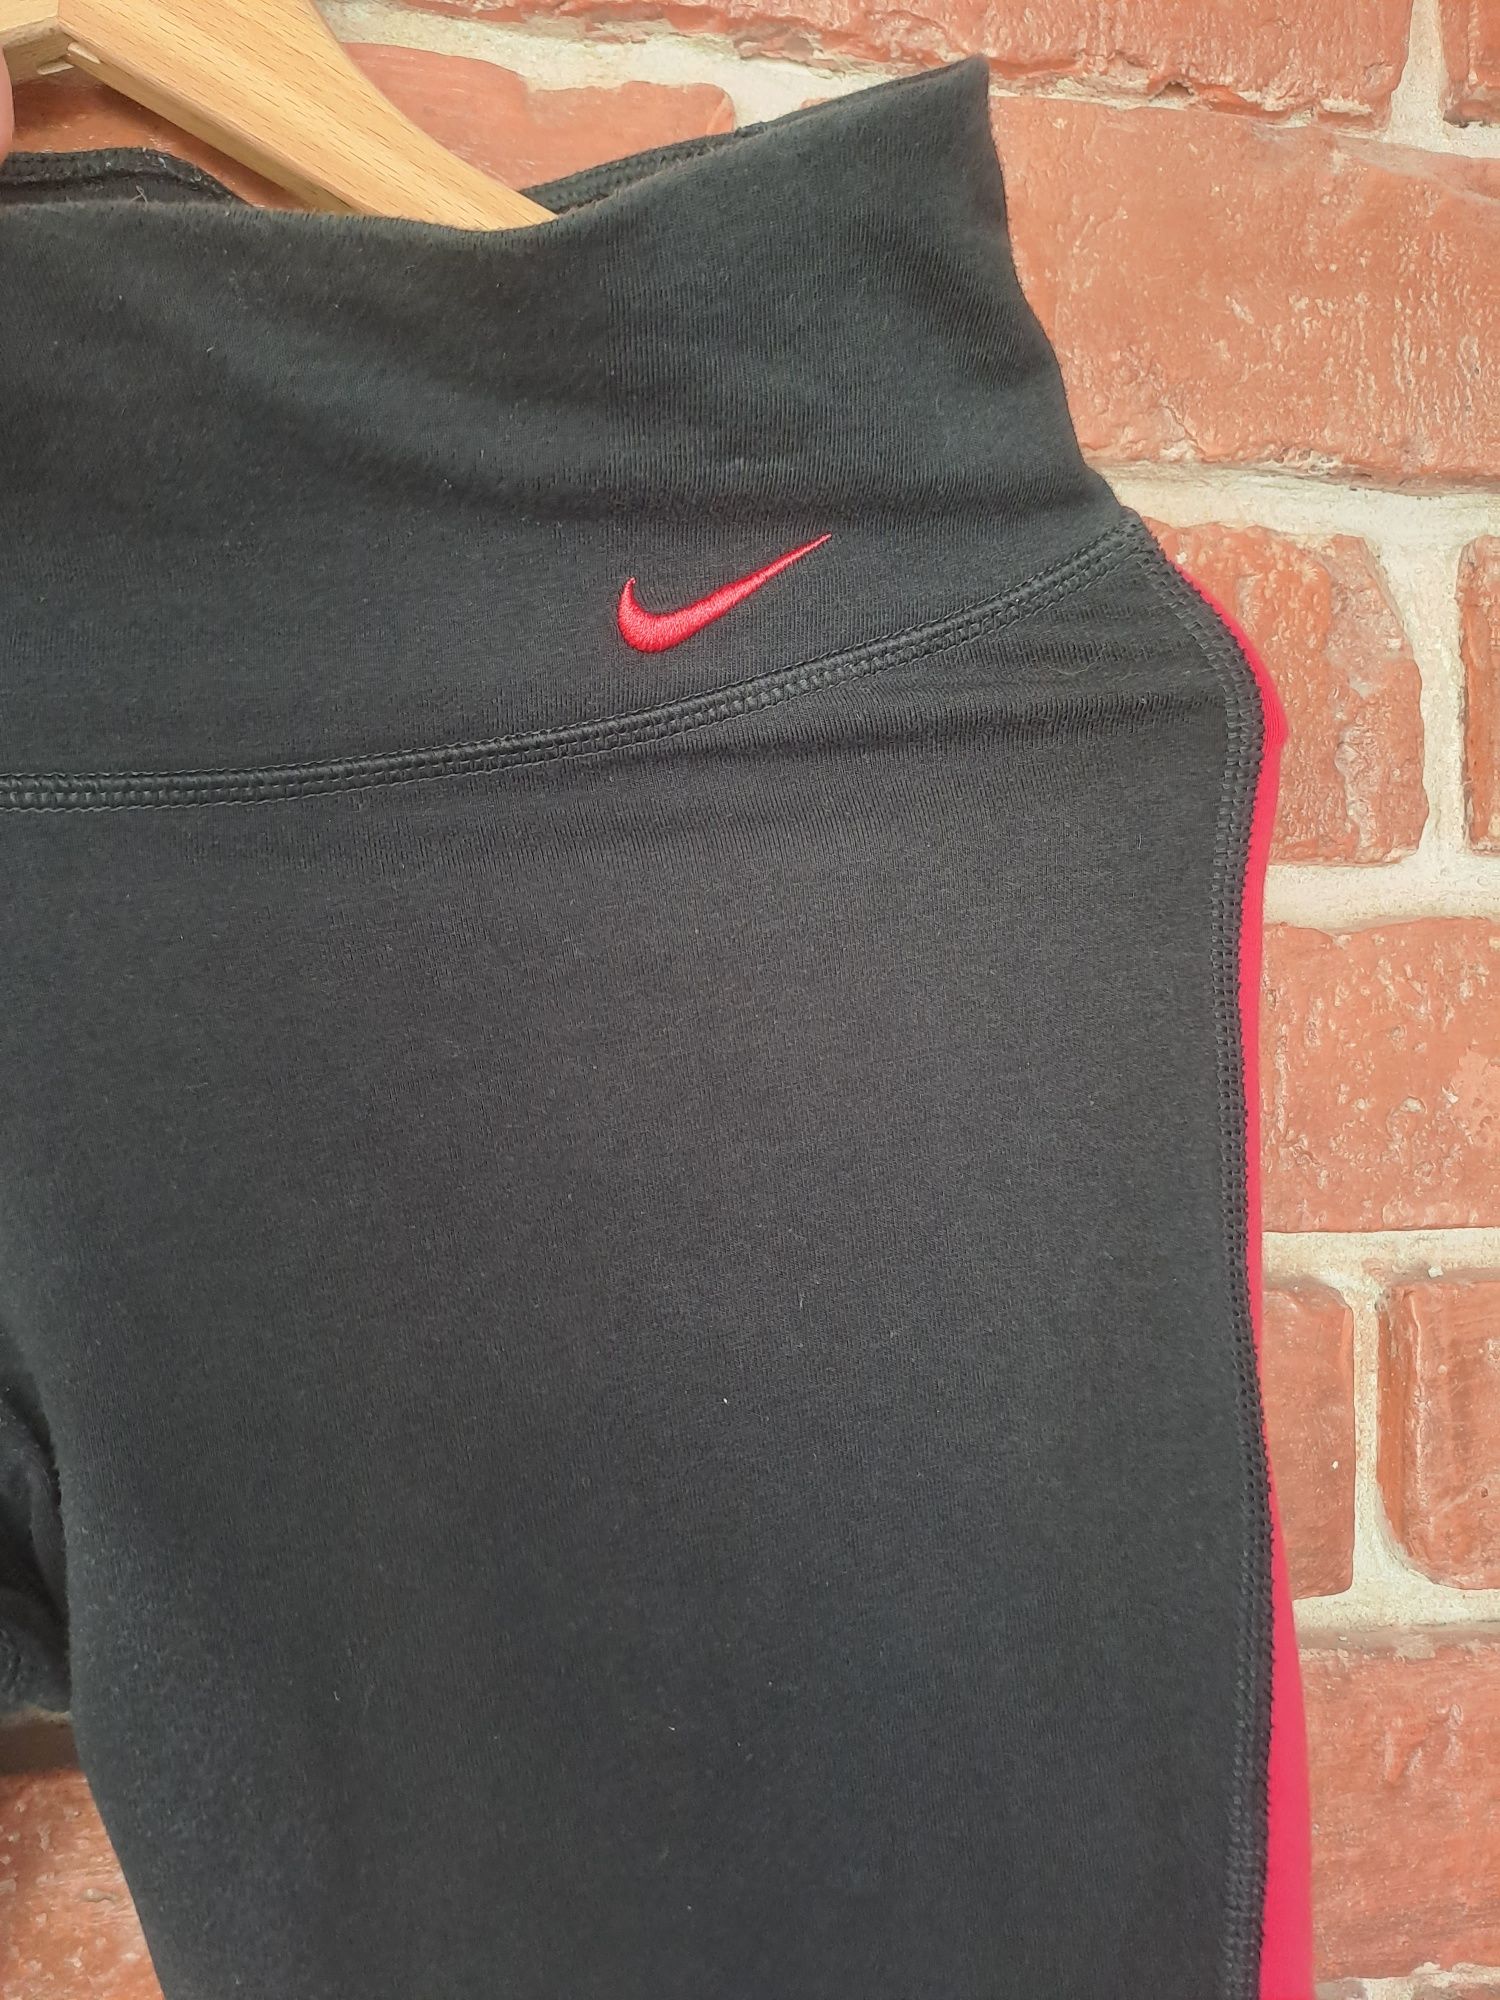 Damskie legginsy leginsy sportowe spodnie 3/4 Nike Dri-fit  r.S